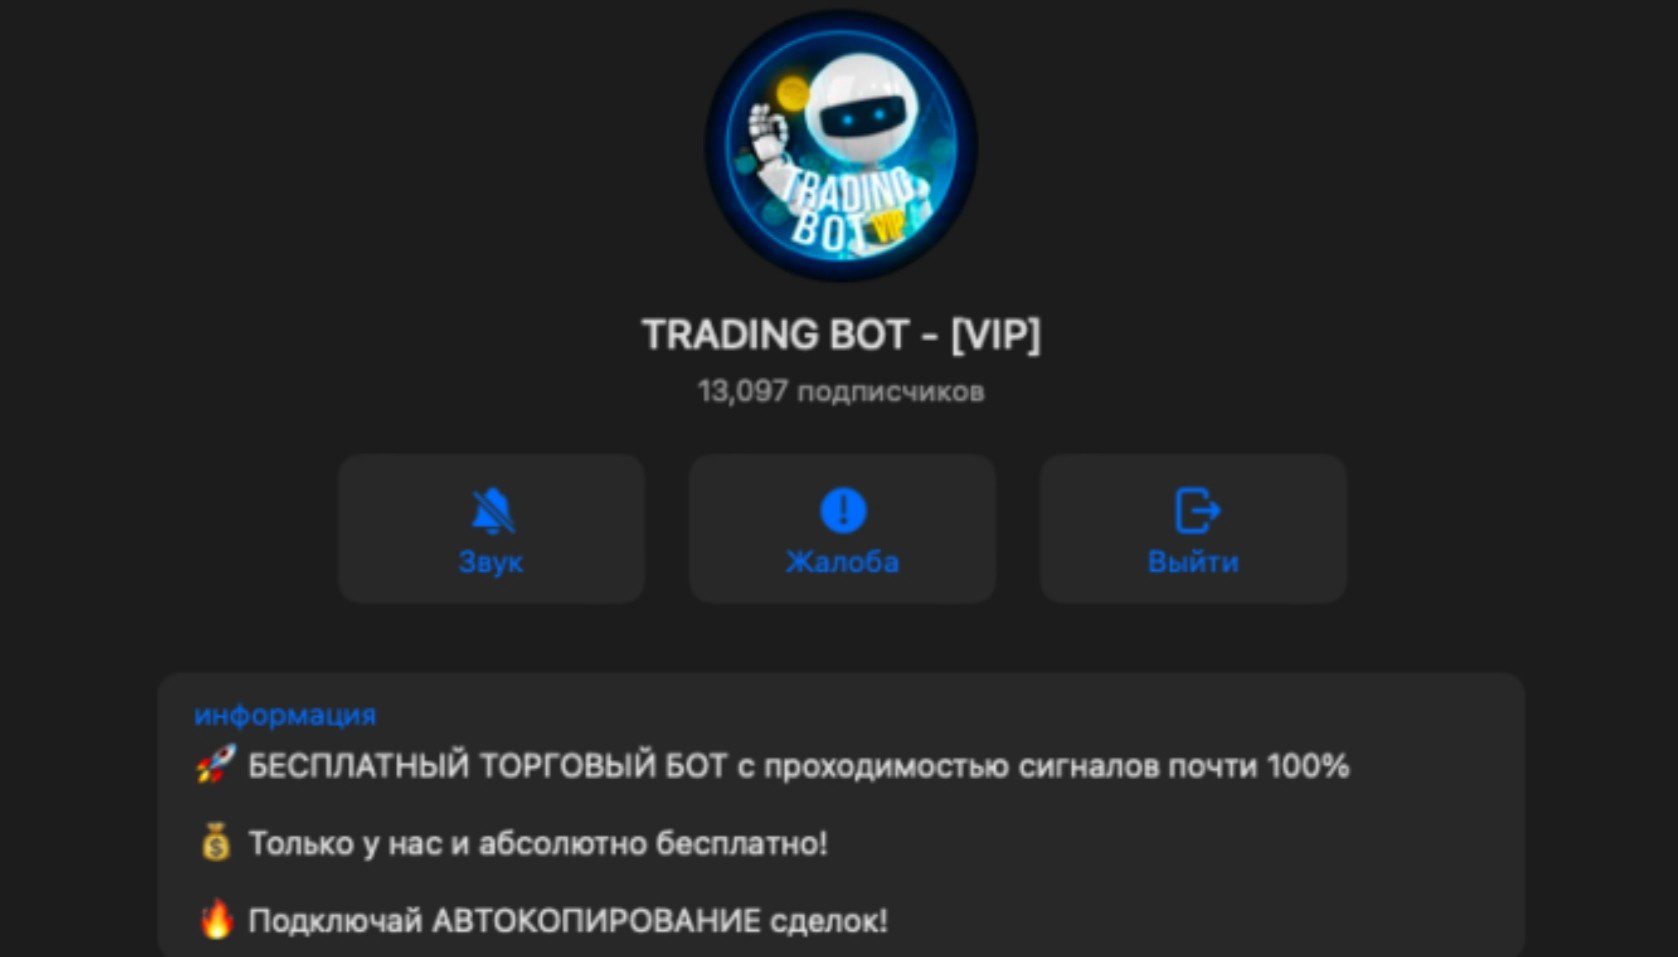 Trading Bot Vip телеграм